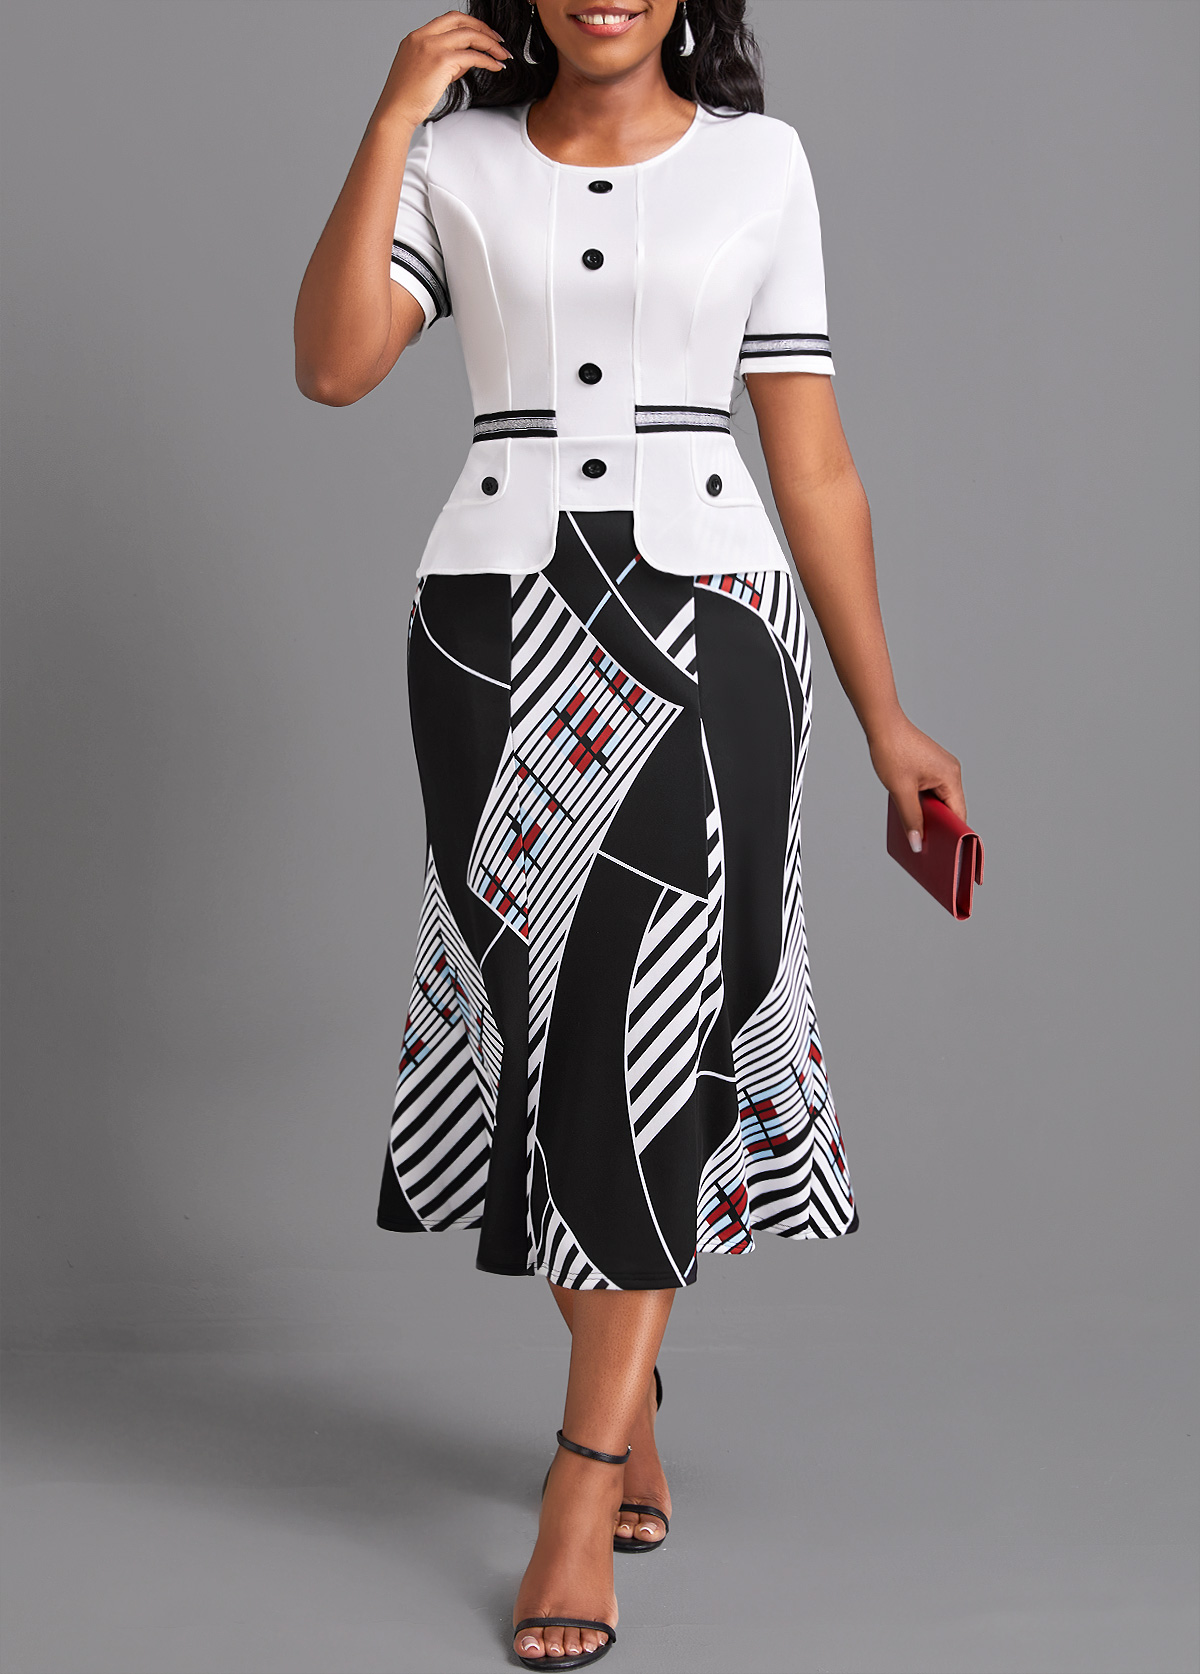 Geometric Print Contrast Binding White Bodycon Dress